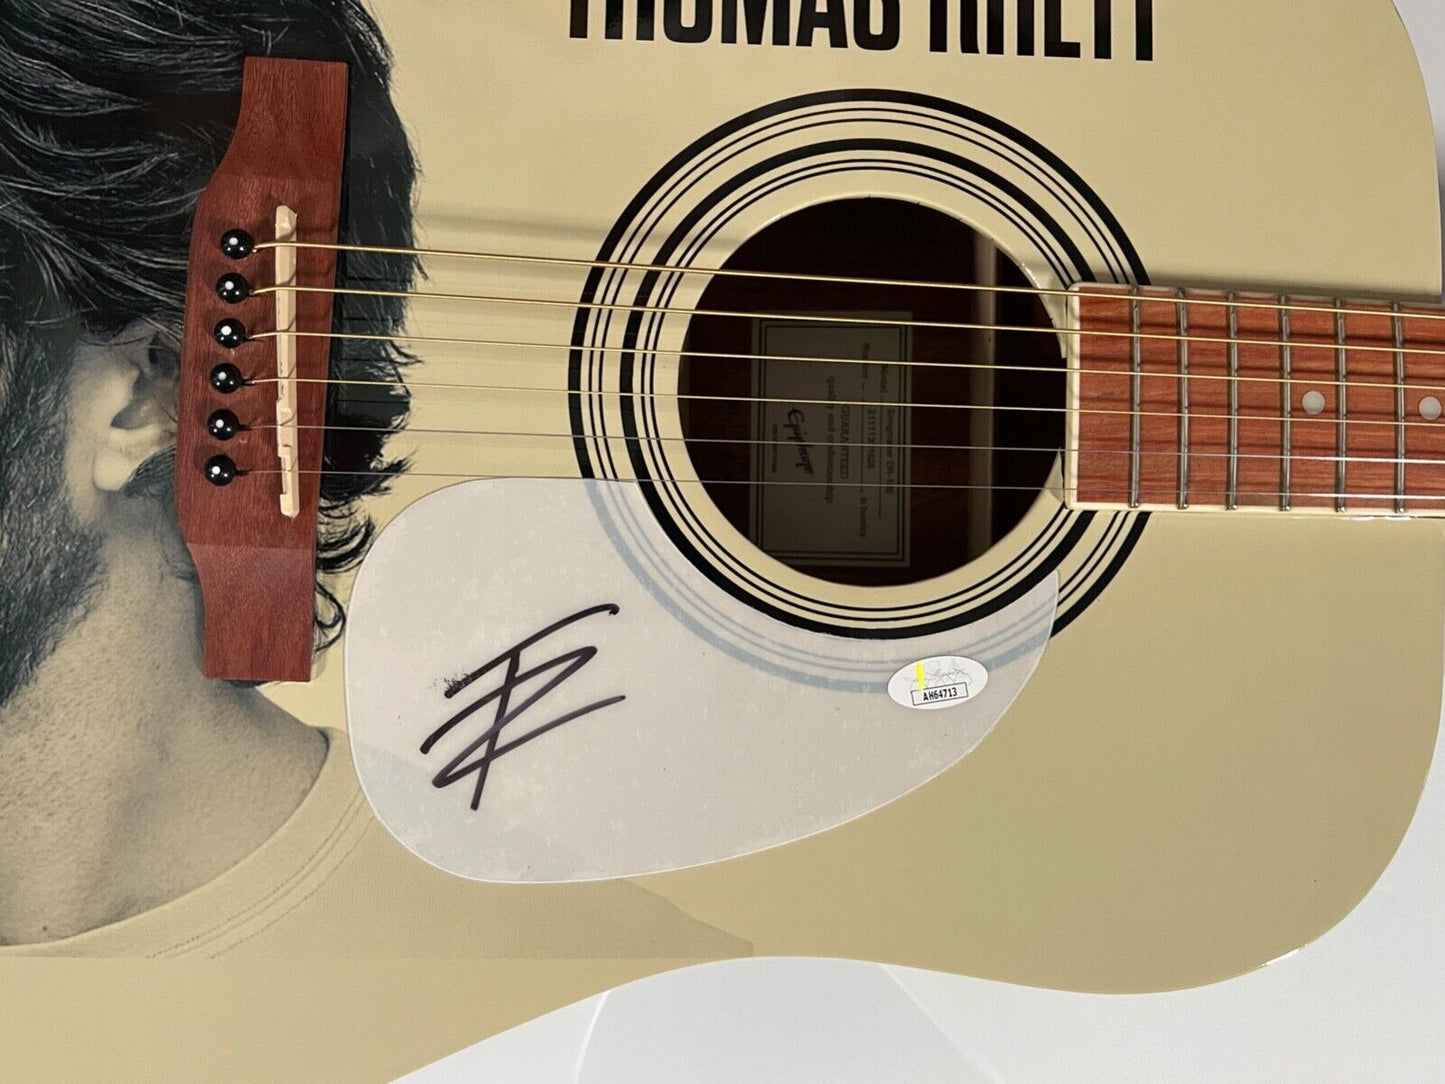 Thomas Rhett JSA Guitar Autograph Signed Acoustic Guitar